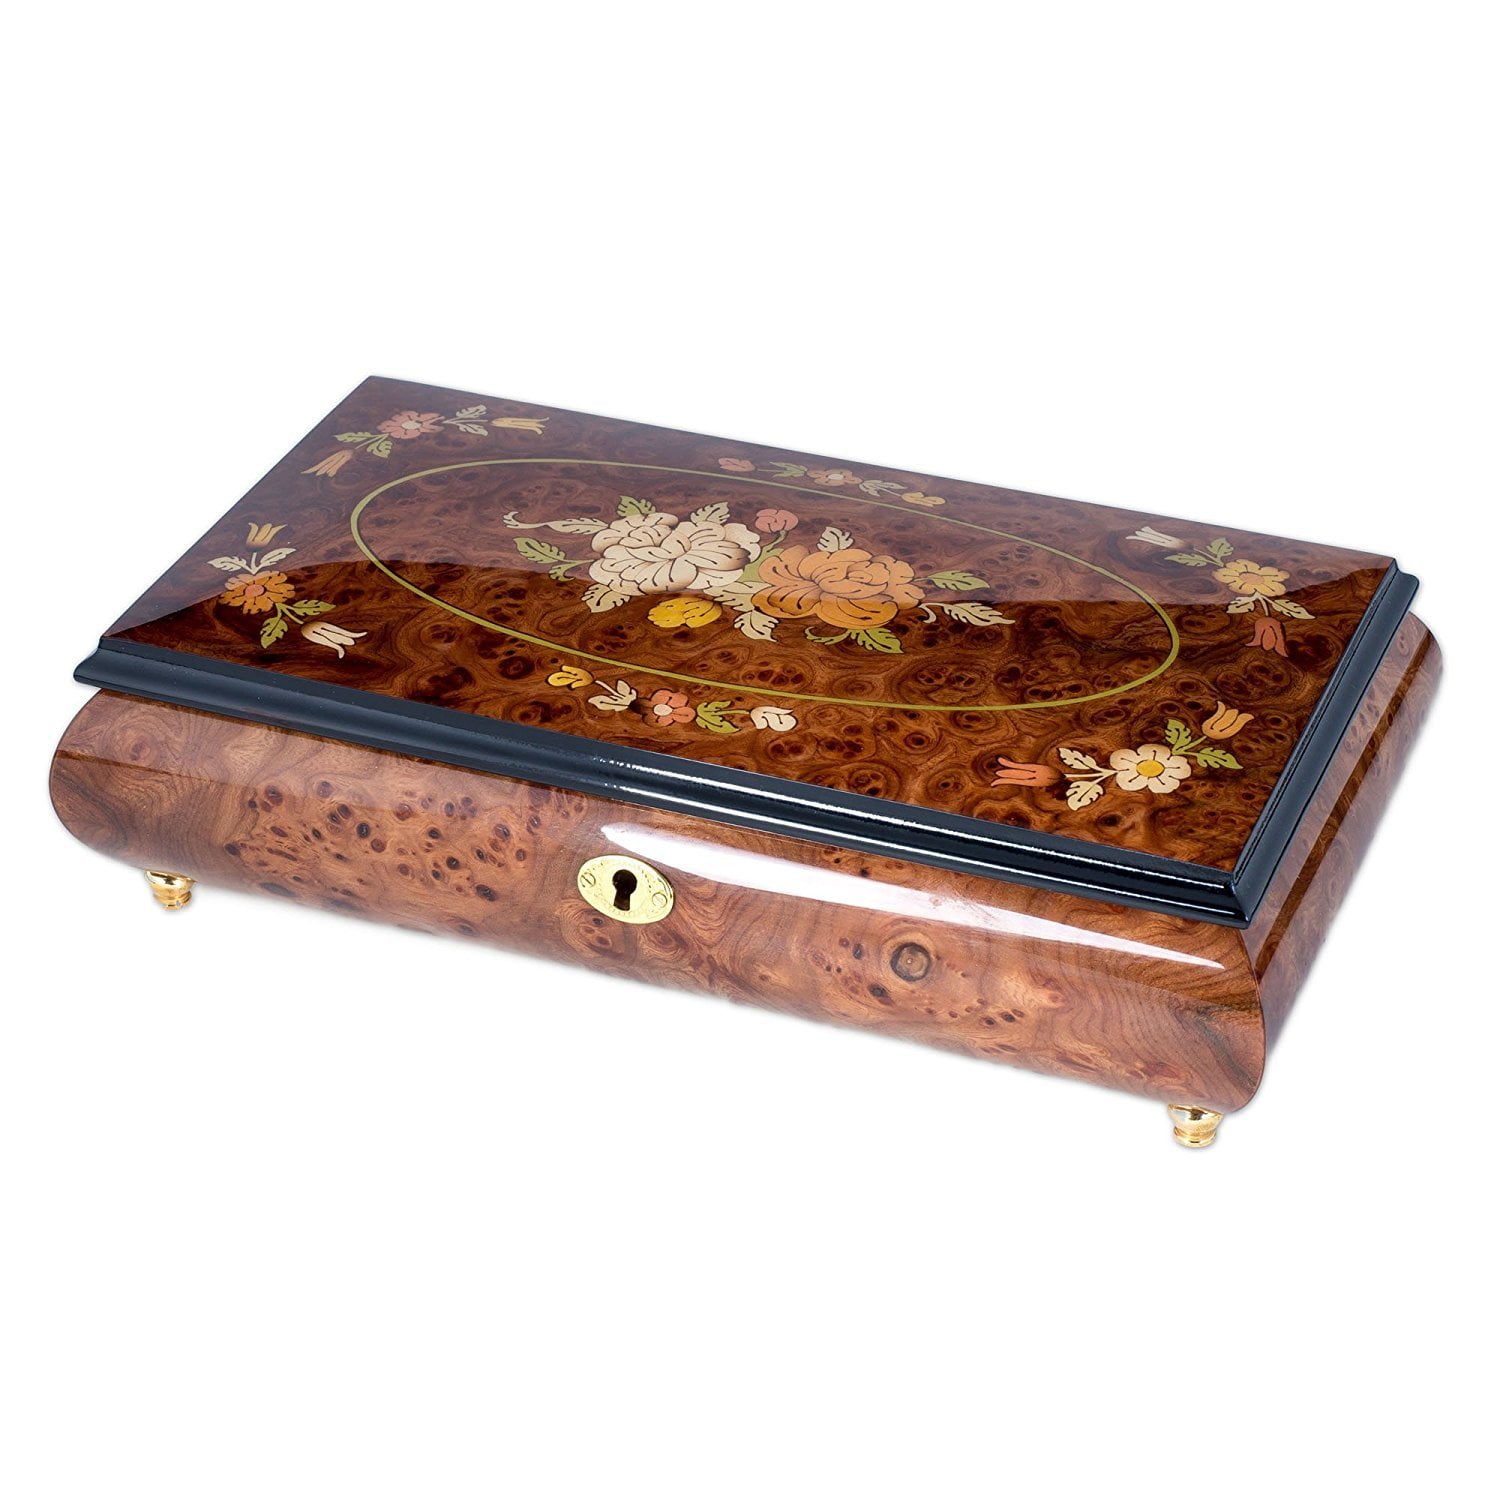 Floral Vignette Glossy Dark Olmo Italian Inlaid Wood Music Box